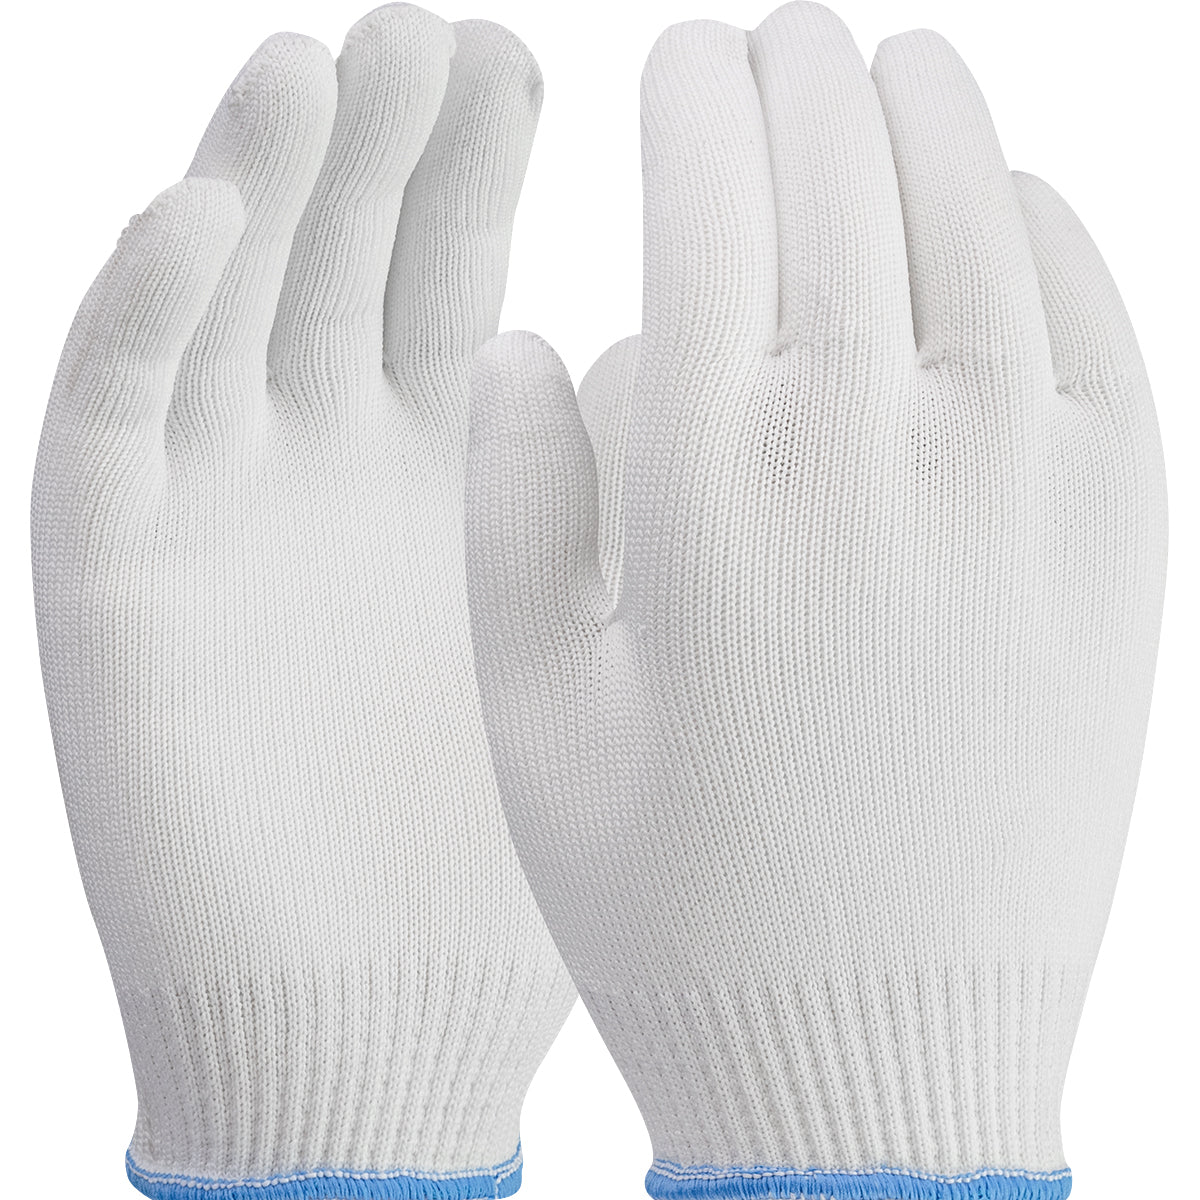 West Chester 713SNL Light Weight Seamless Knit Nylon Glove - White